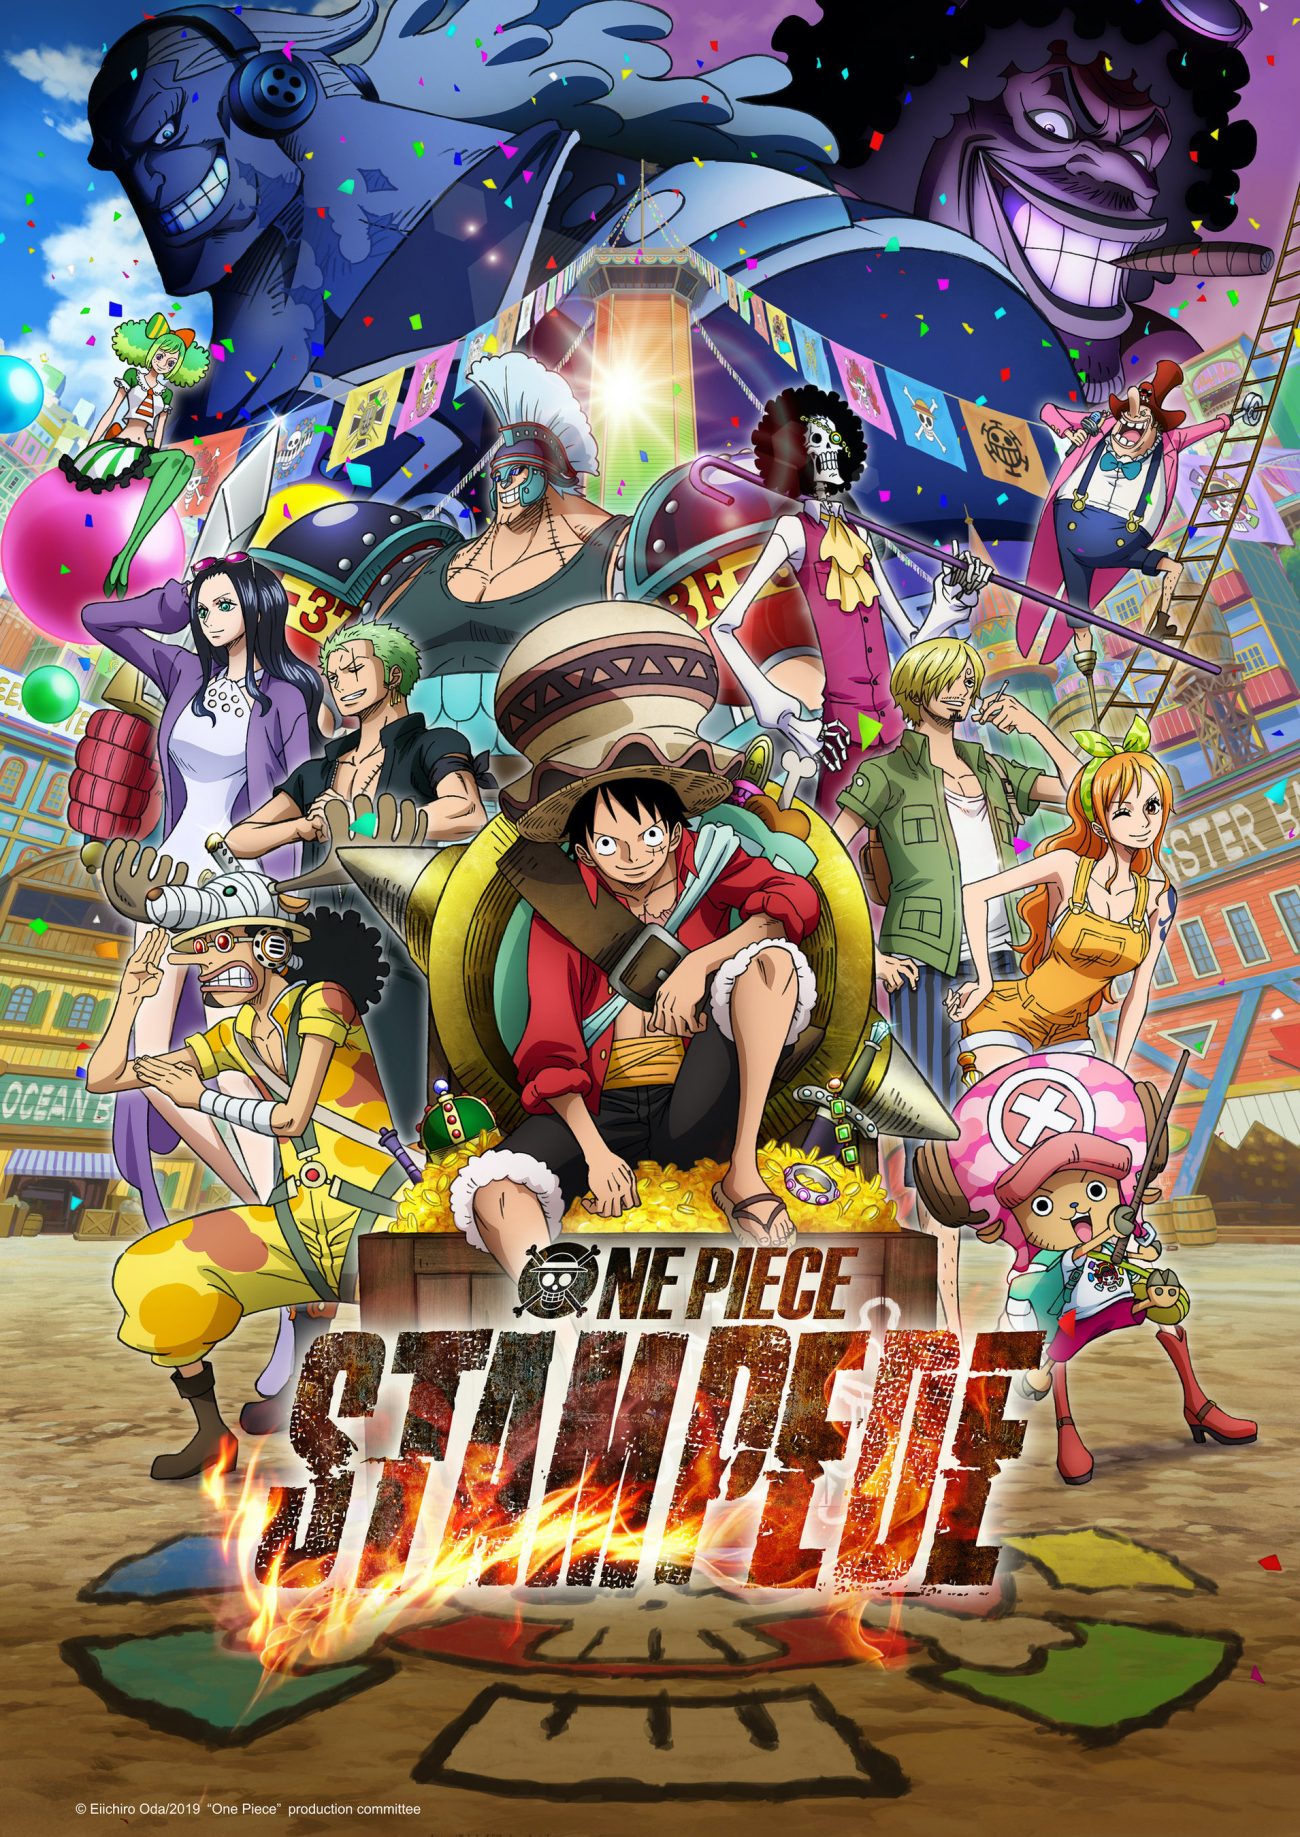 One Piece Reviews 